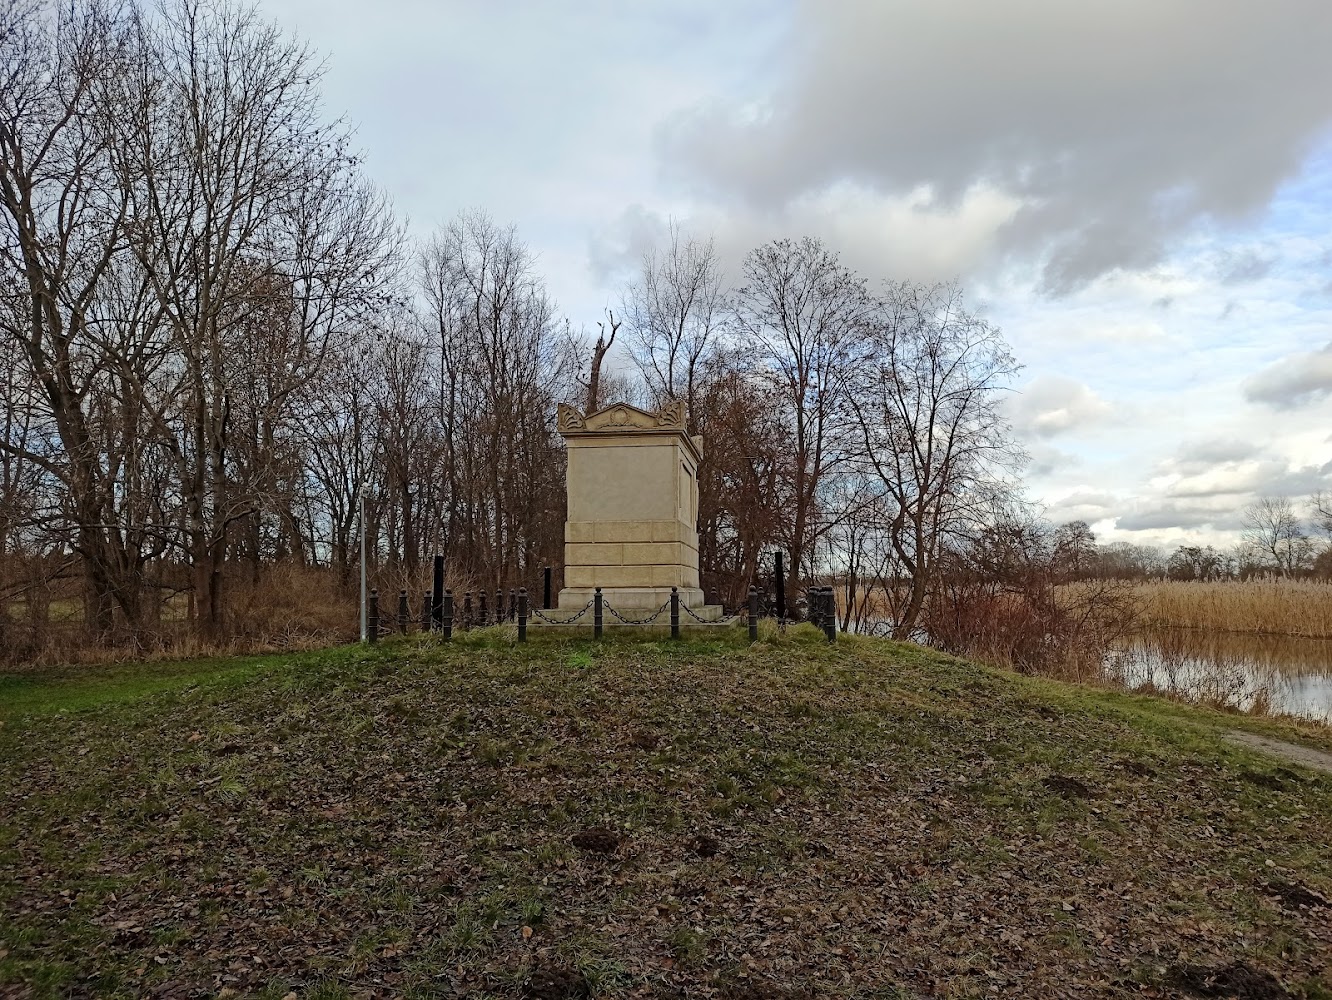 Monument to the Battle of Raszyn